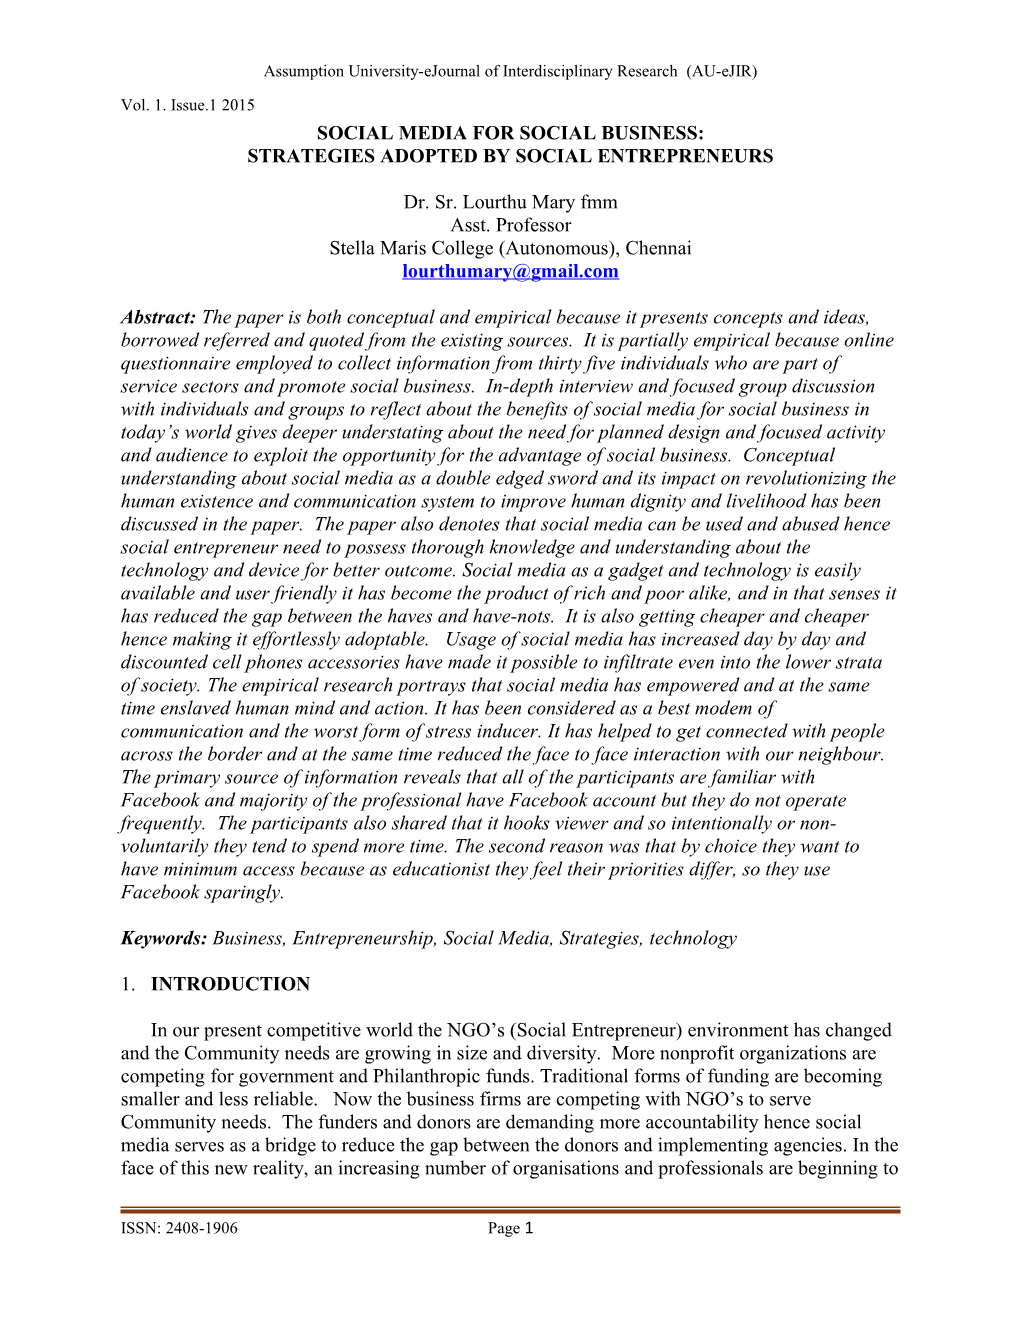 Assumption University-Ejournal of Interdisciplinary Research (AU-Ejir) s1